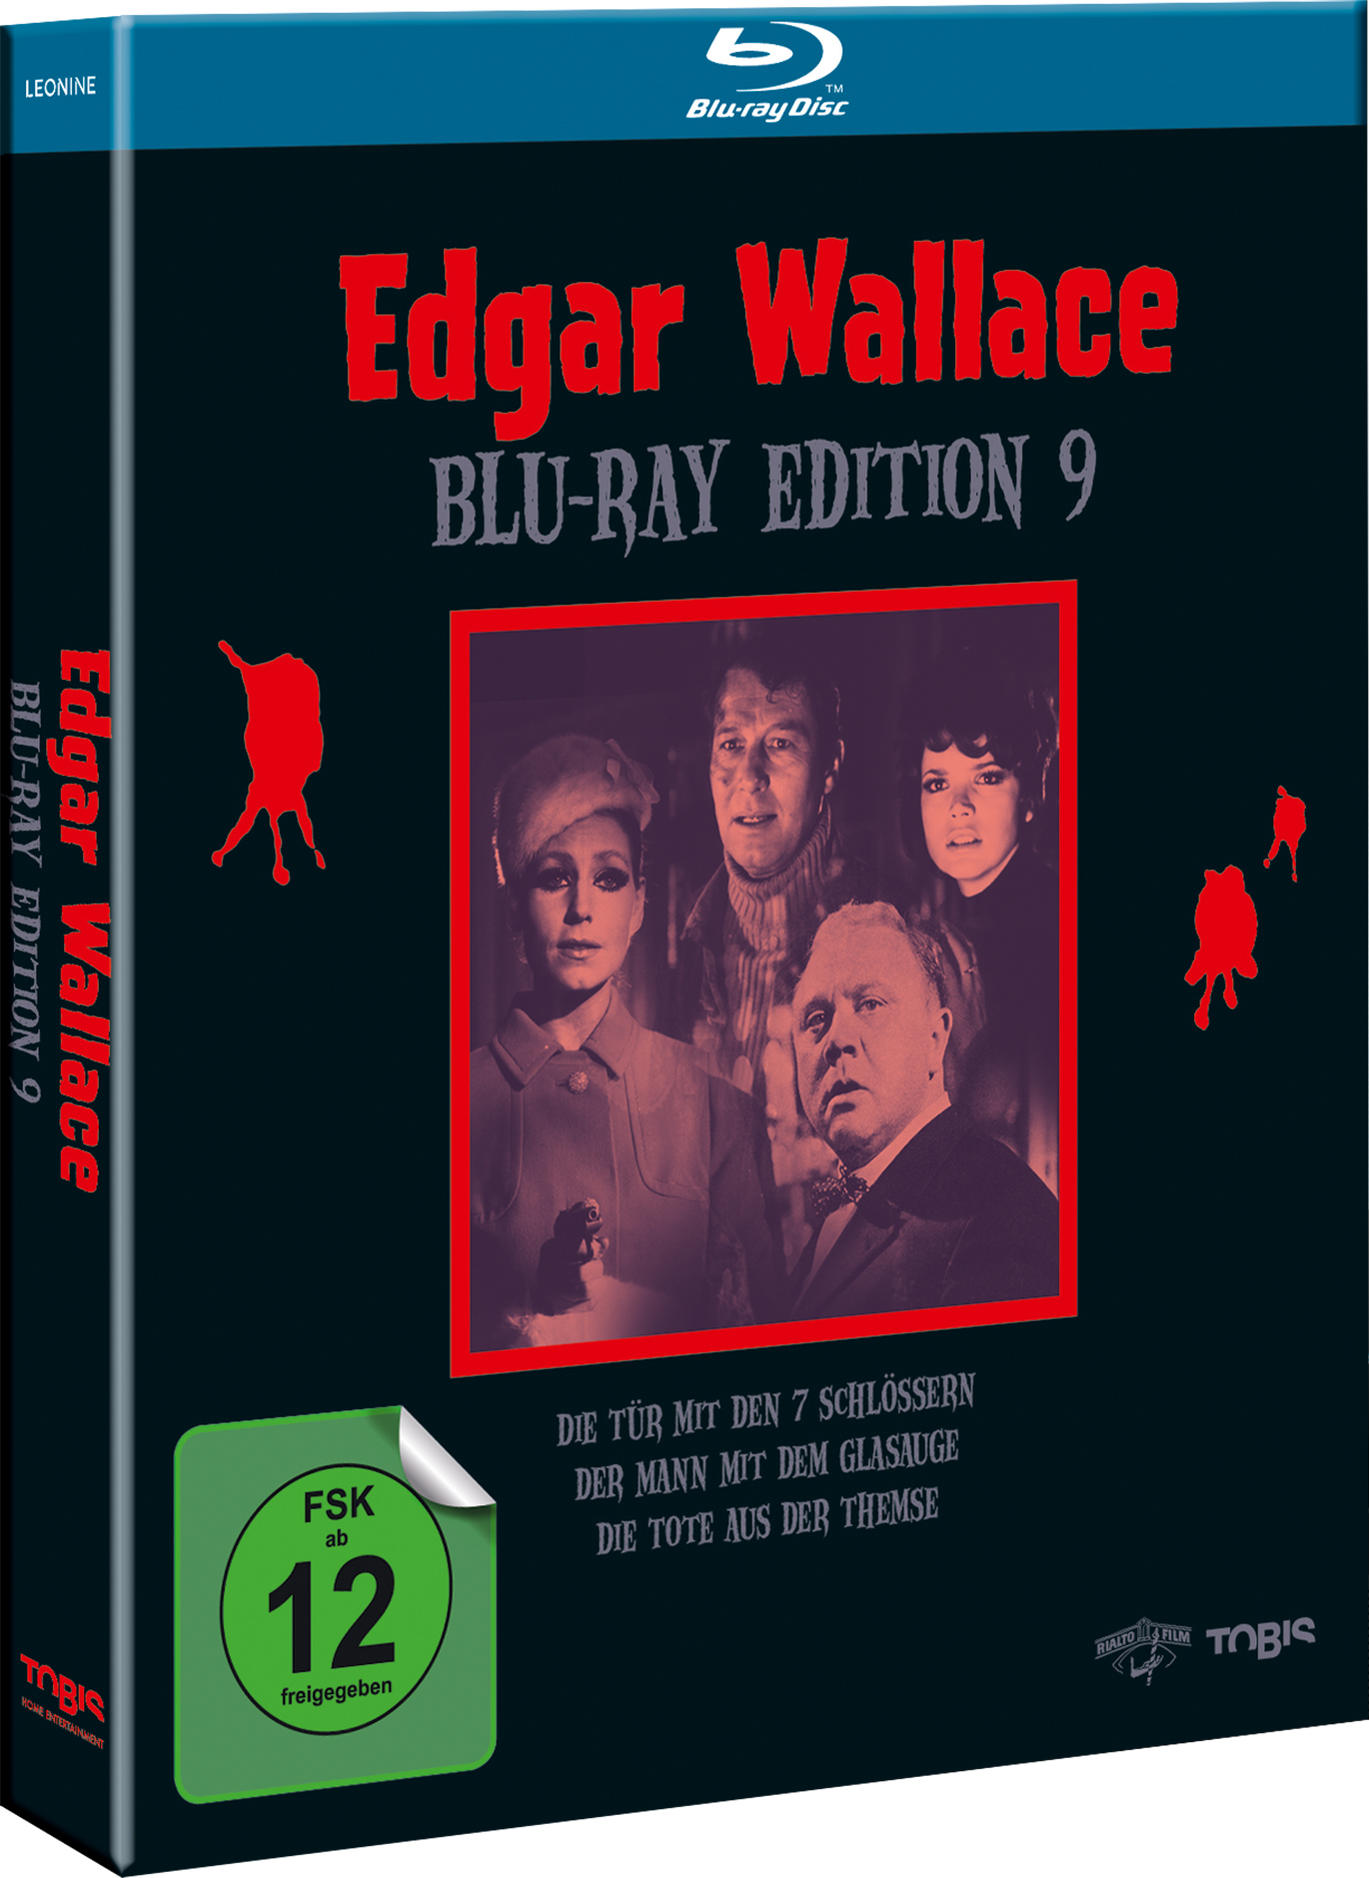 Wallace Edition Blu-ray Blu-ray 9 Edgar